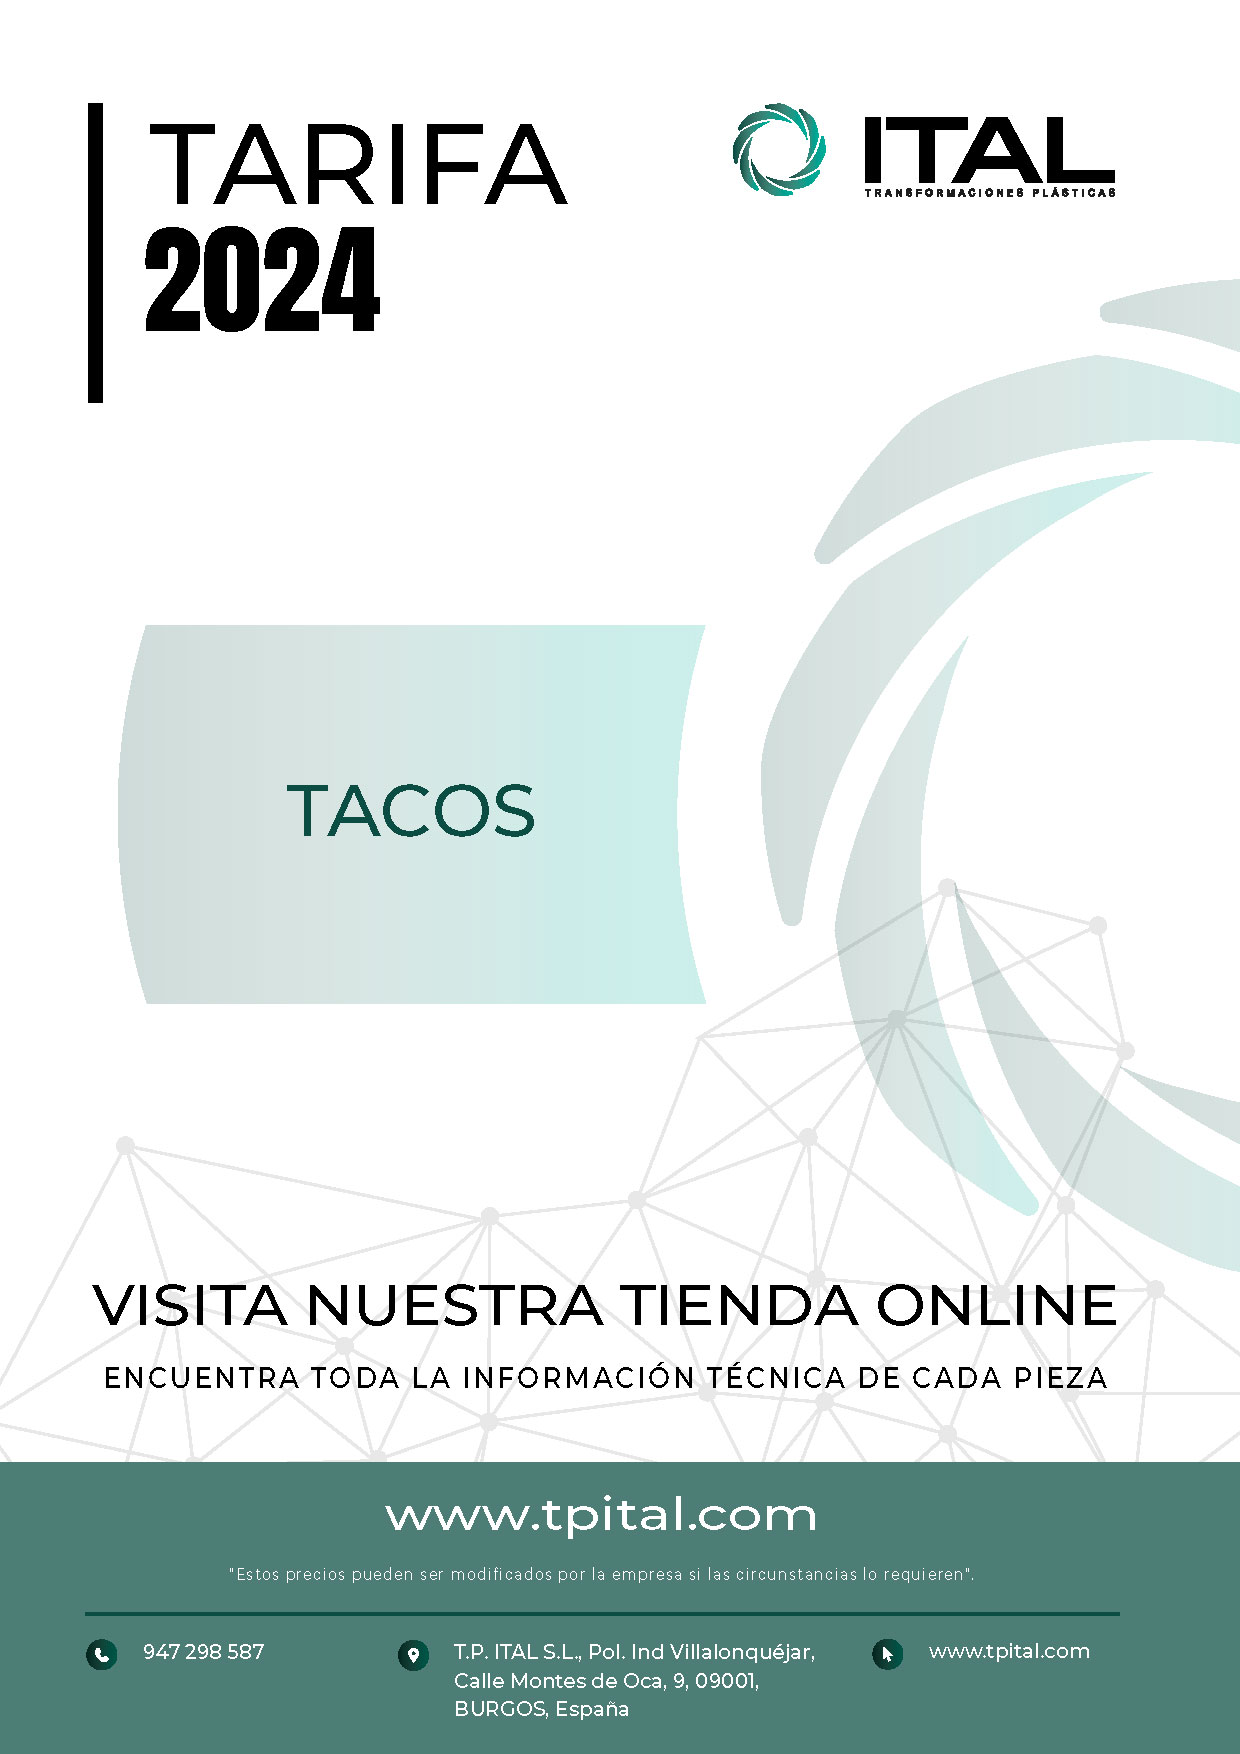 Tarifas 2023 - Tarifa Tacos